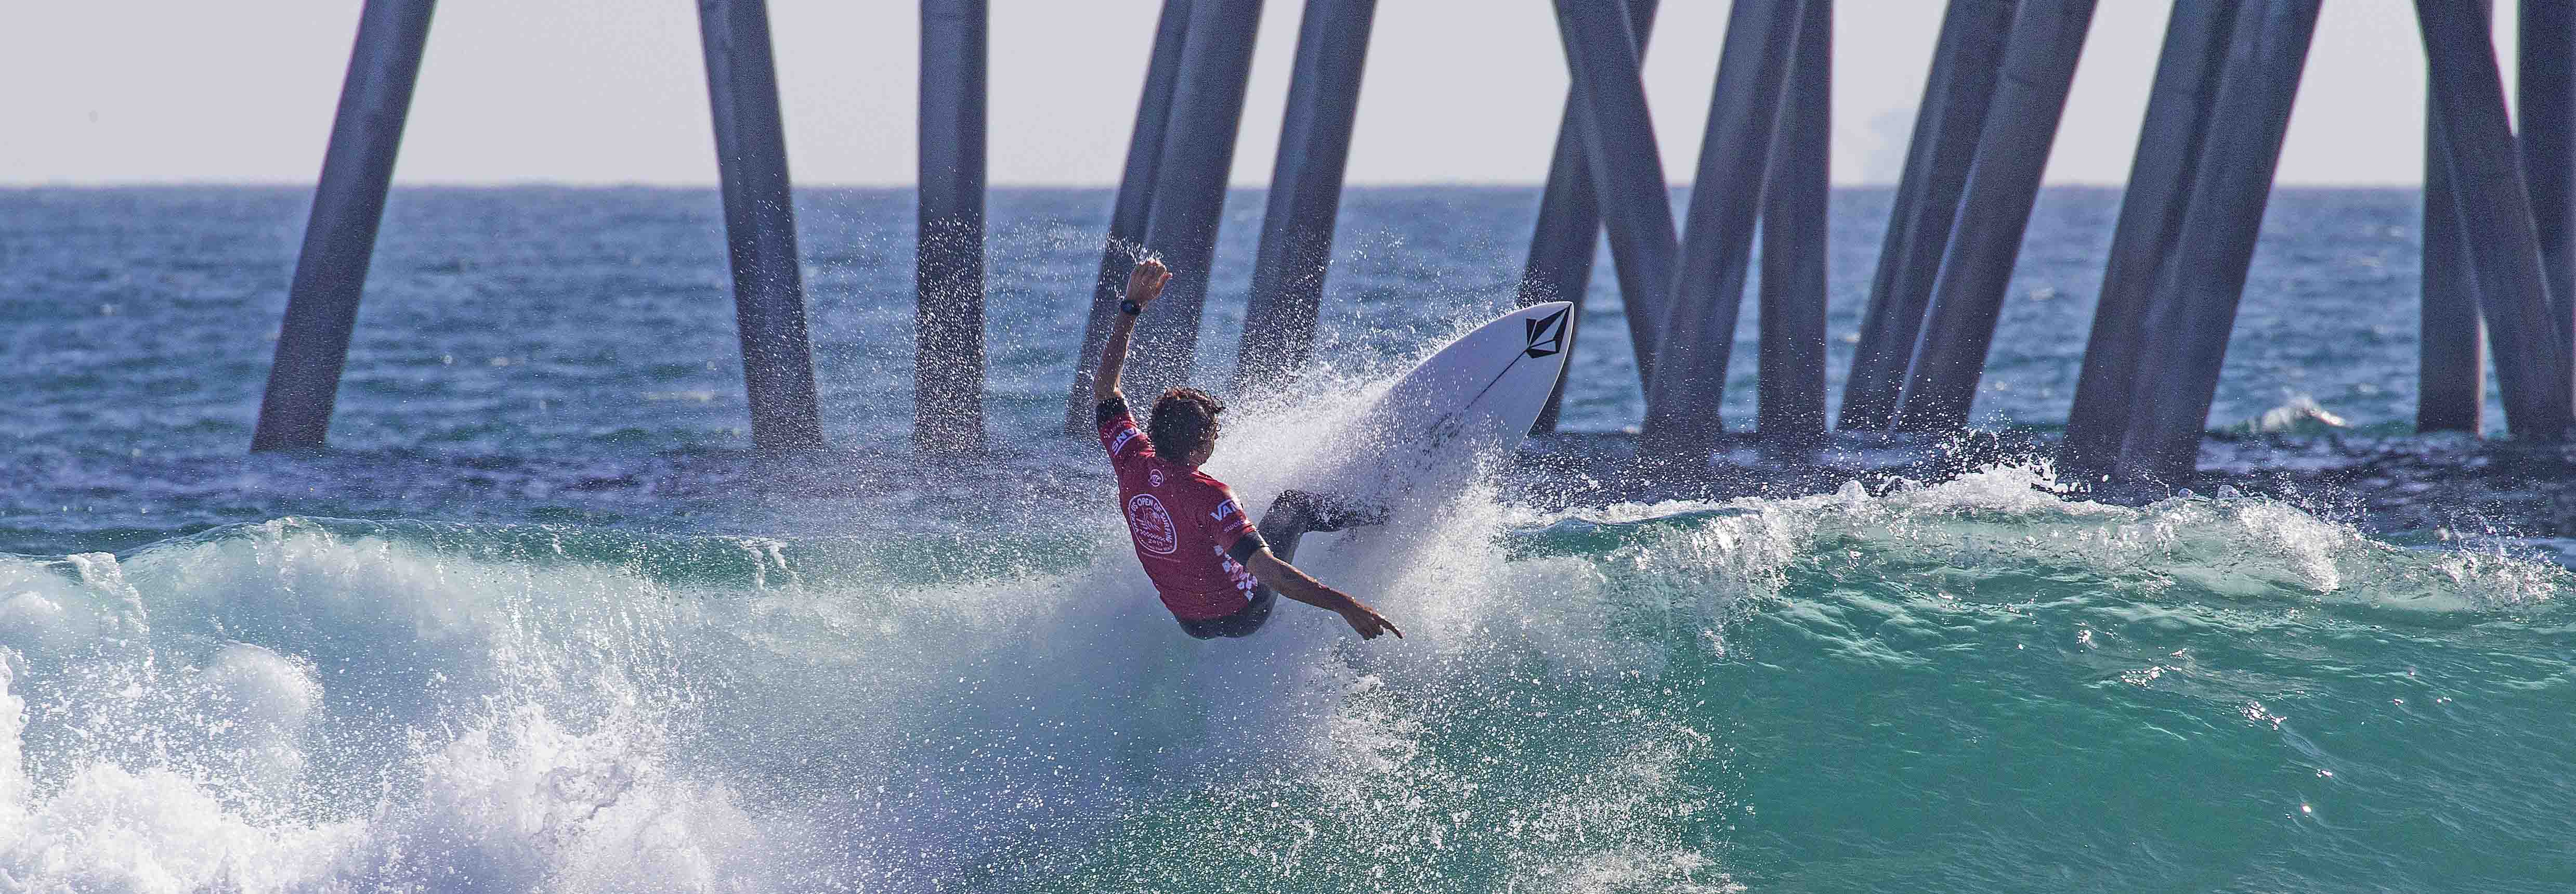 Brasileiro Yago Dora vence mundial de surfe na Califórnia